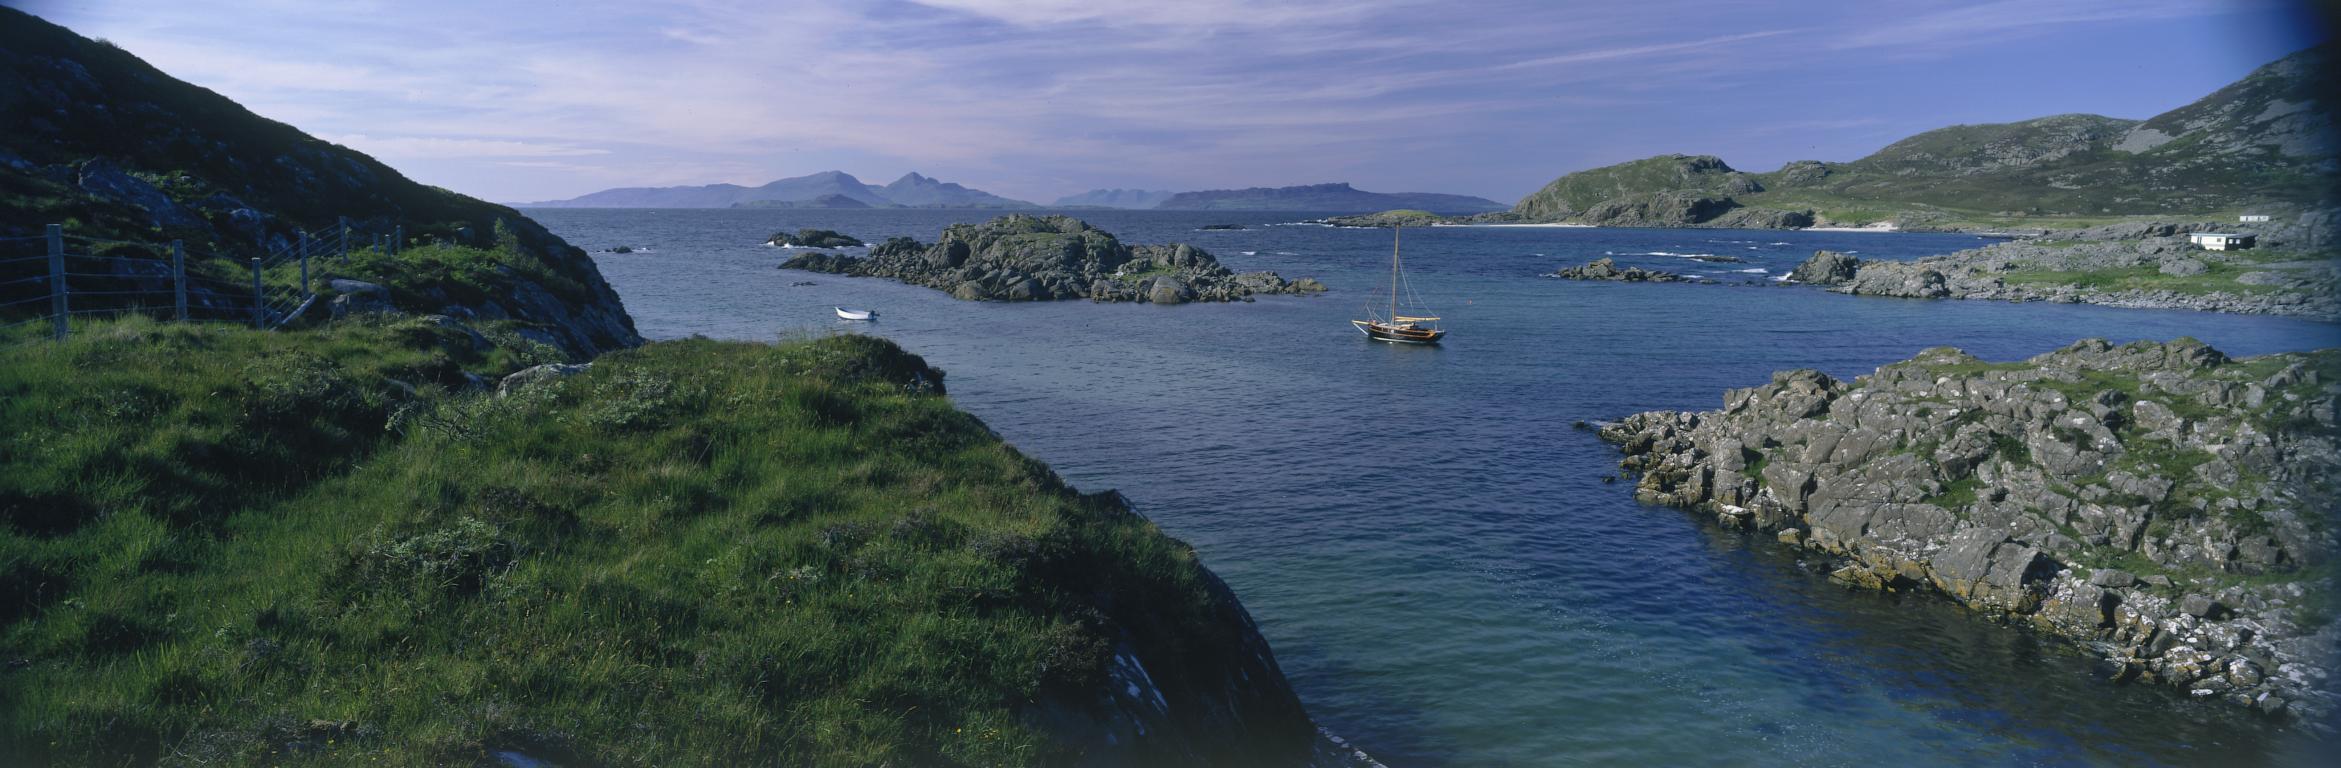 The Small Isles from Arisaig (Credit: VisitScotland/Paul Tomkins)